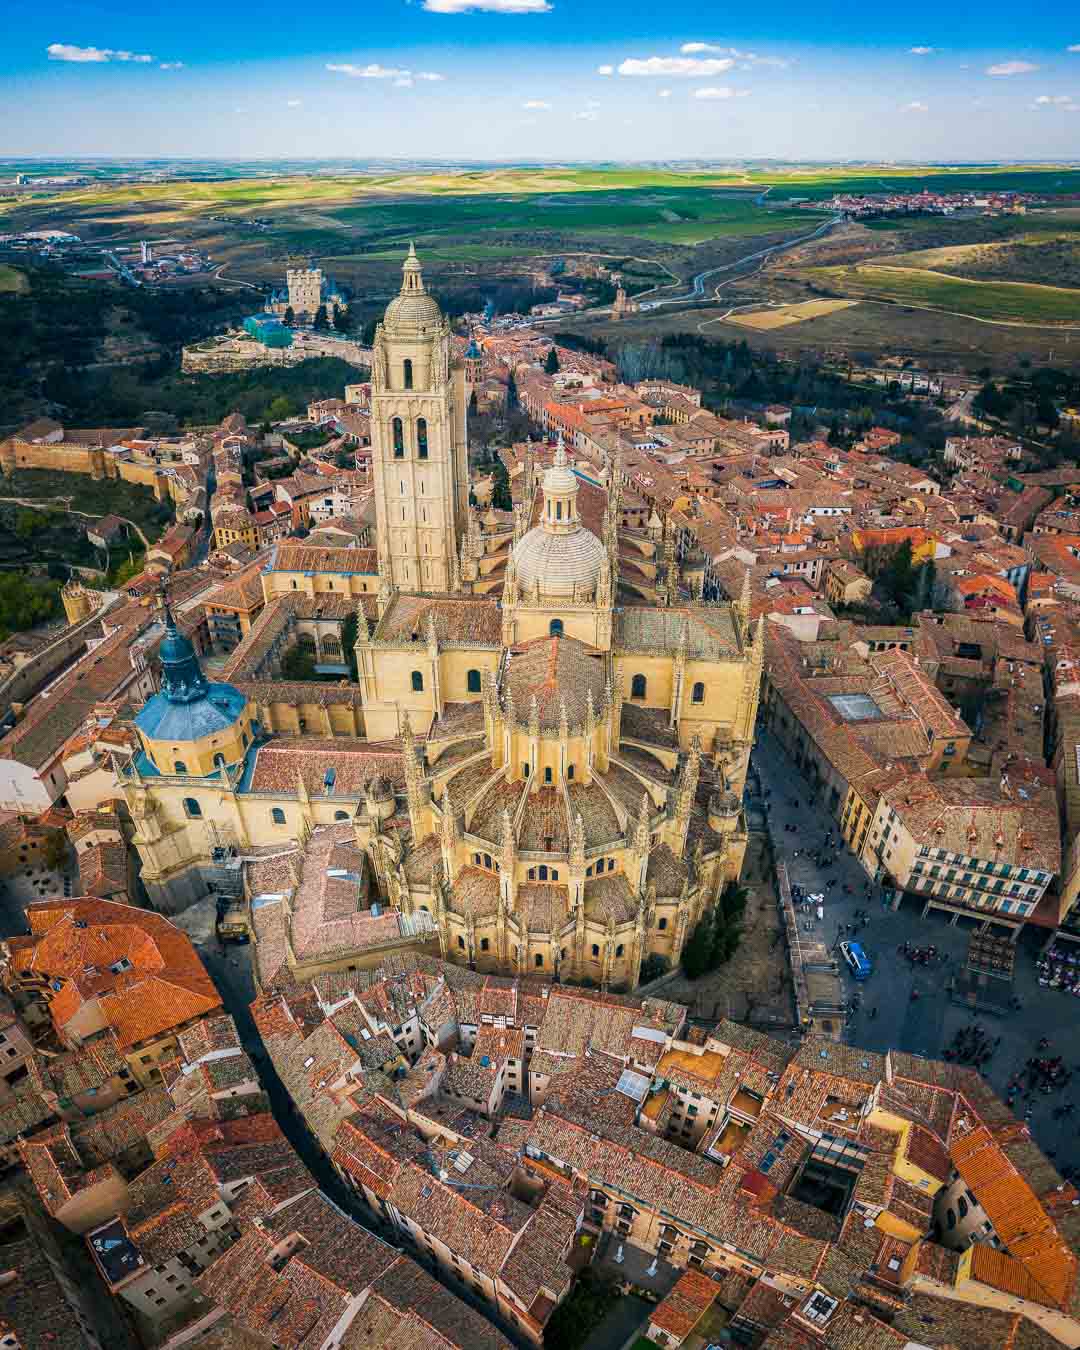 catedral de segovia is one of the best spain landmarks